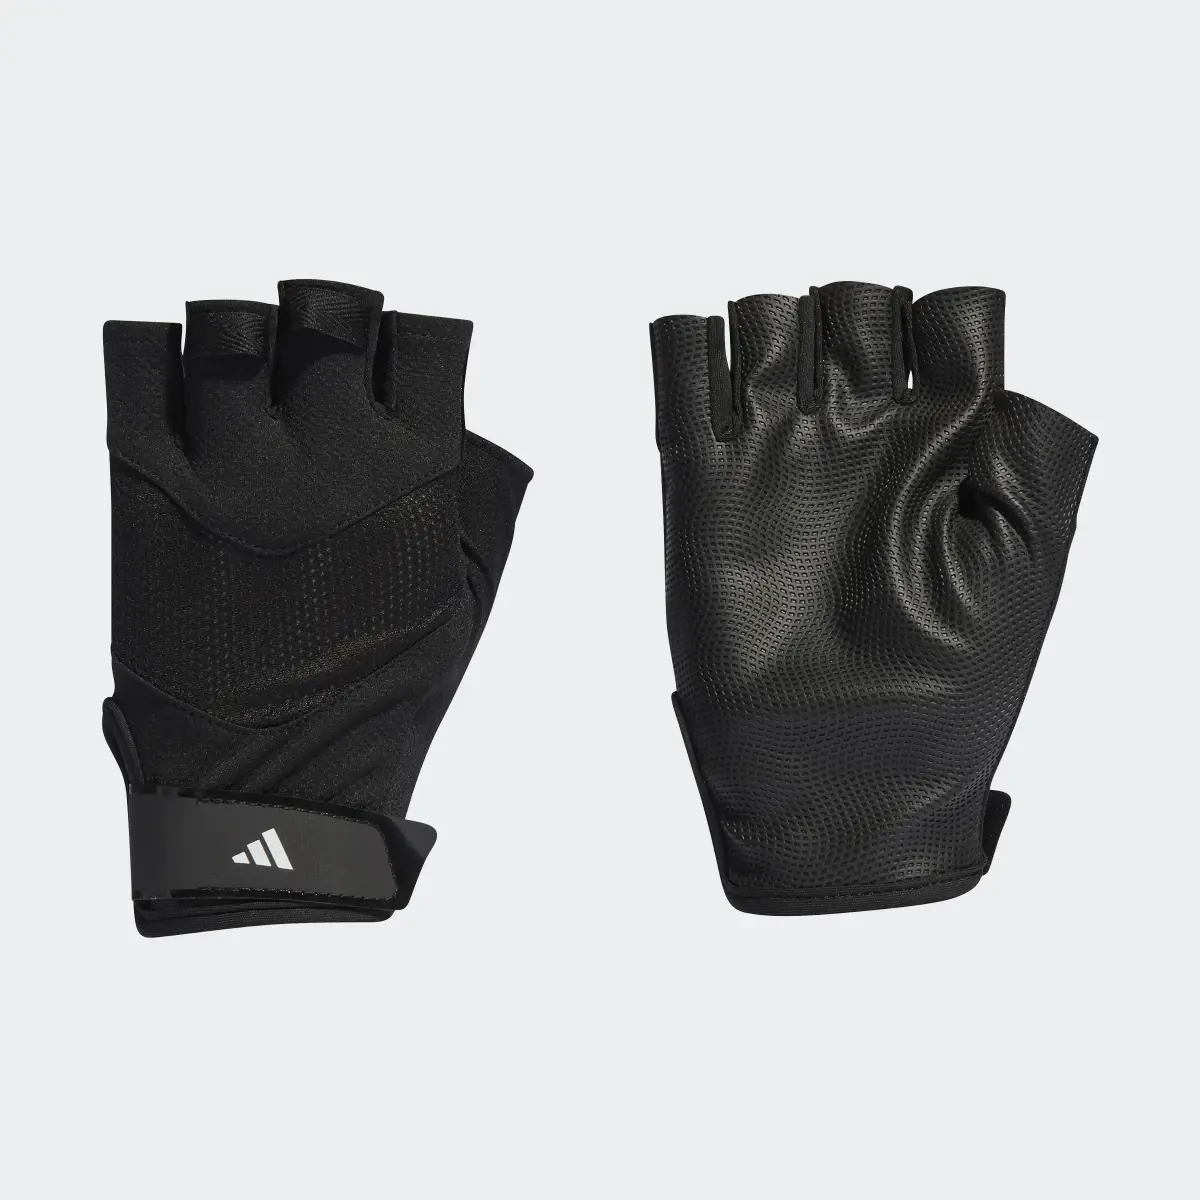 Adidas Training Gloves. 2